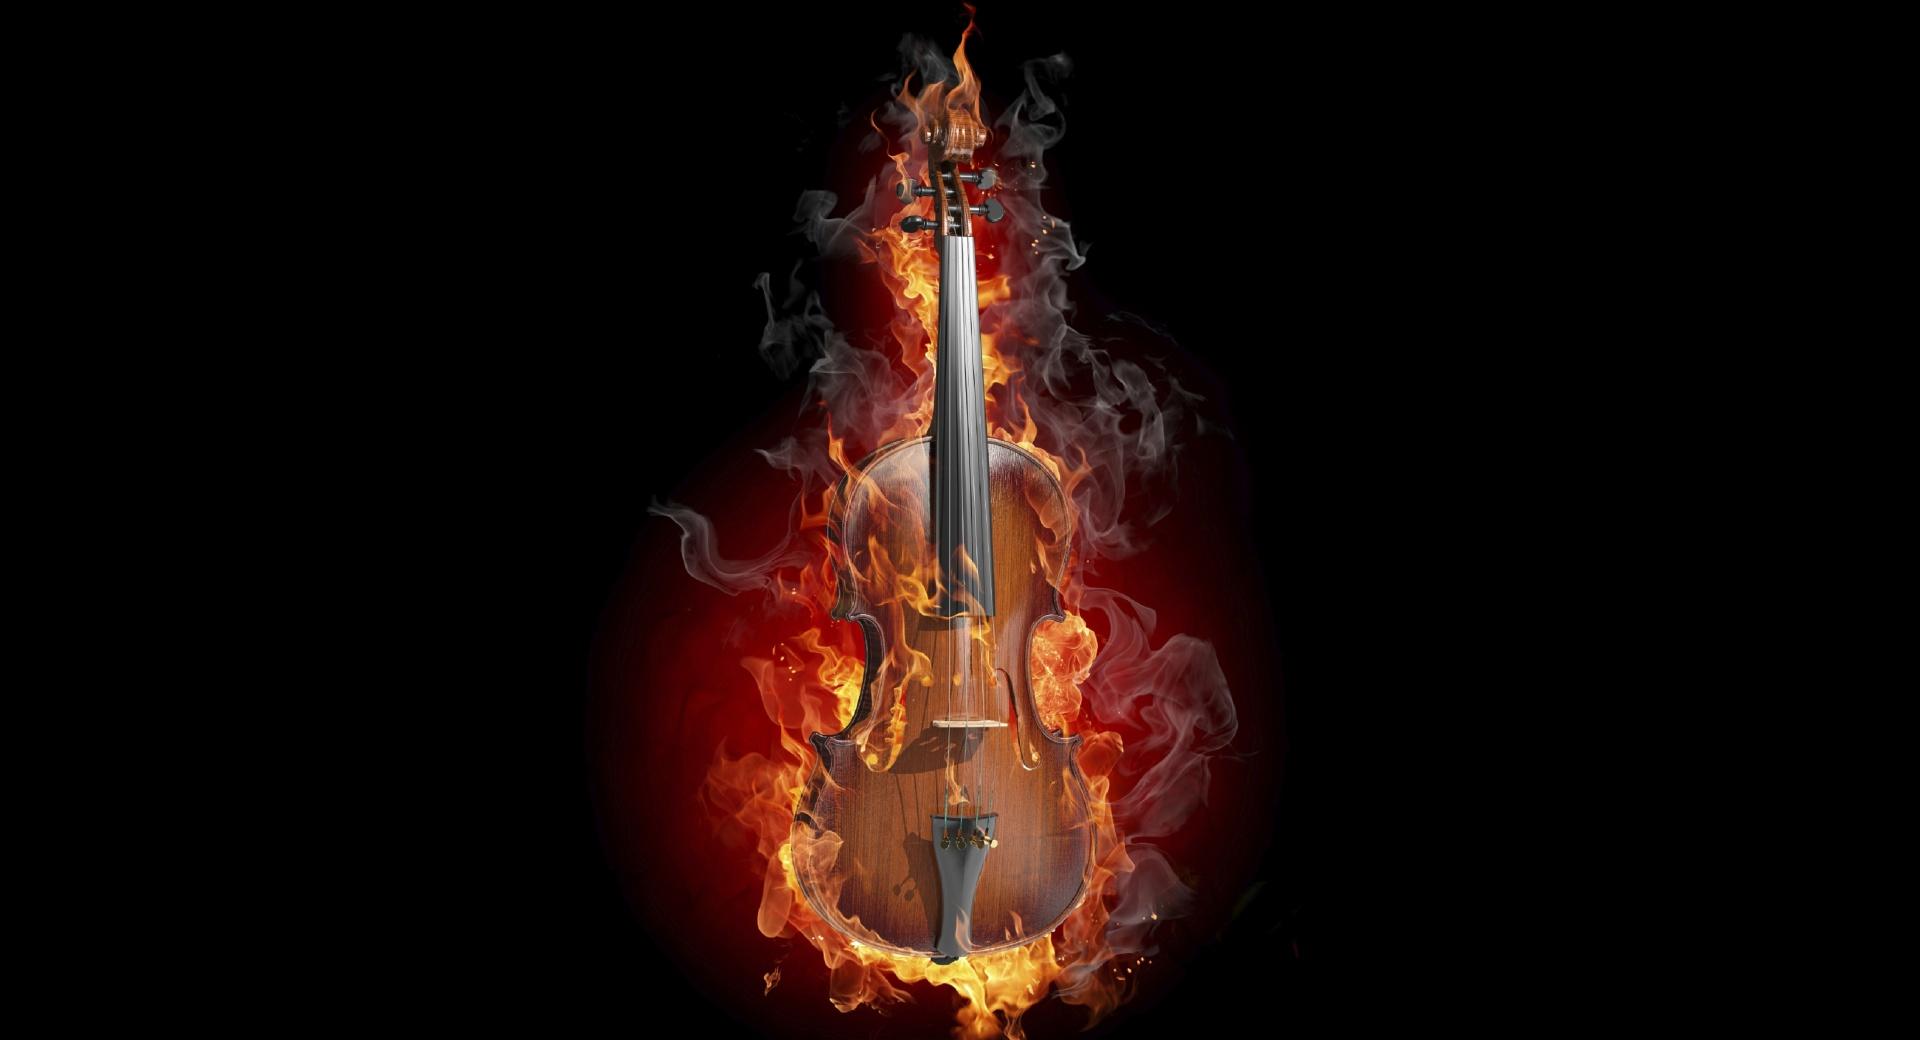 Burning Violin at 1024 x 1024 iPad size wallpapers HD quality